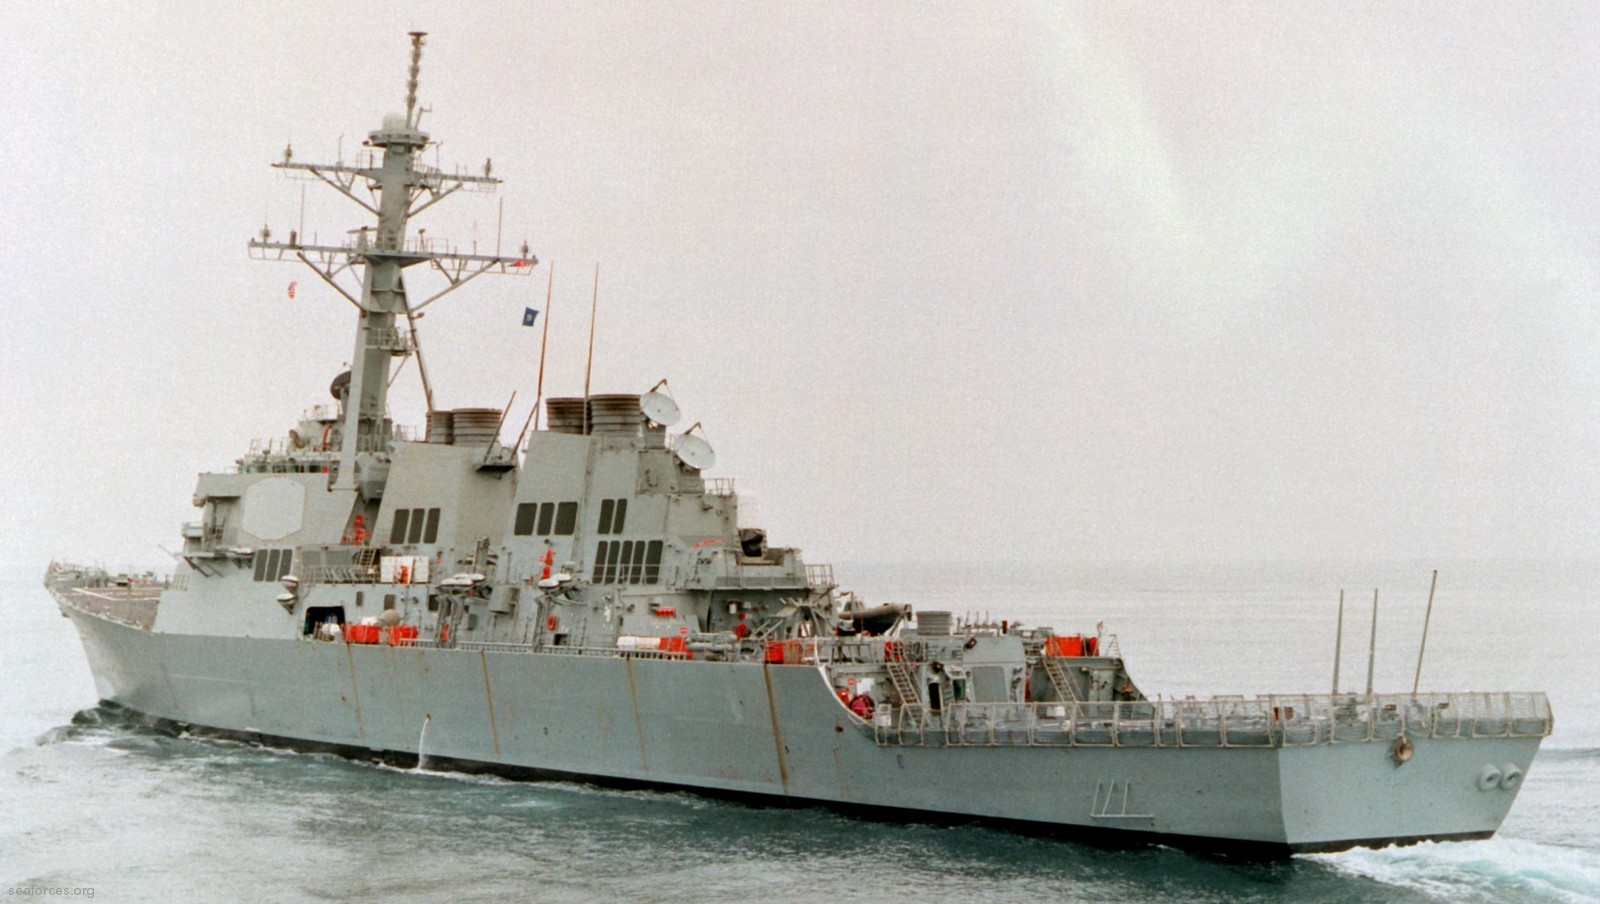 ddg-62 uss fitzgerald guided missile destroyer 1995 114 sea trials bath iron works maine